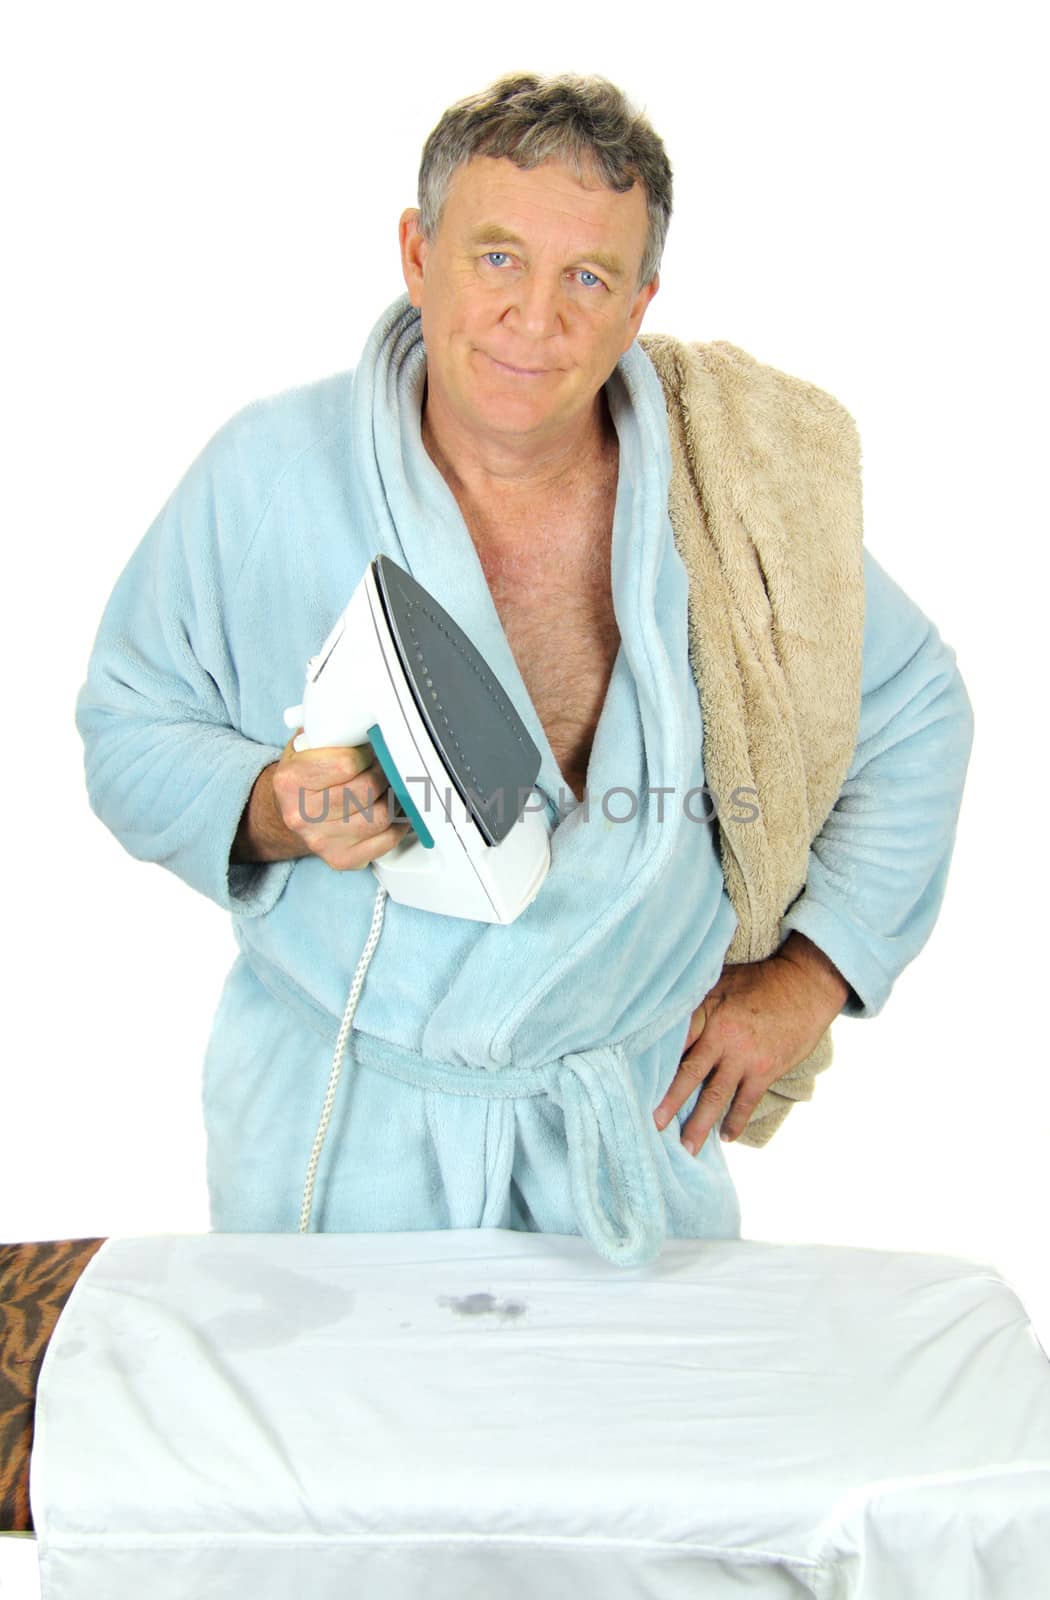 Grumpy middle aged man ironing his shirt.